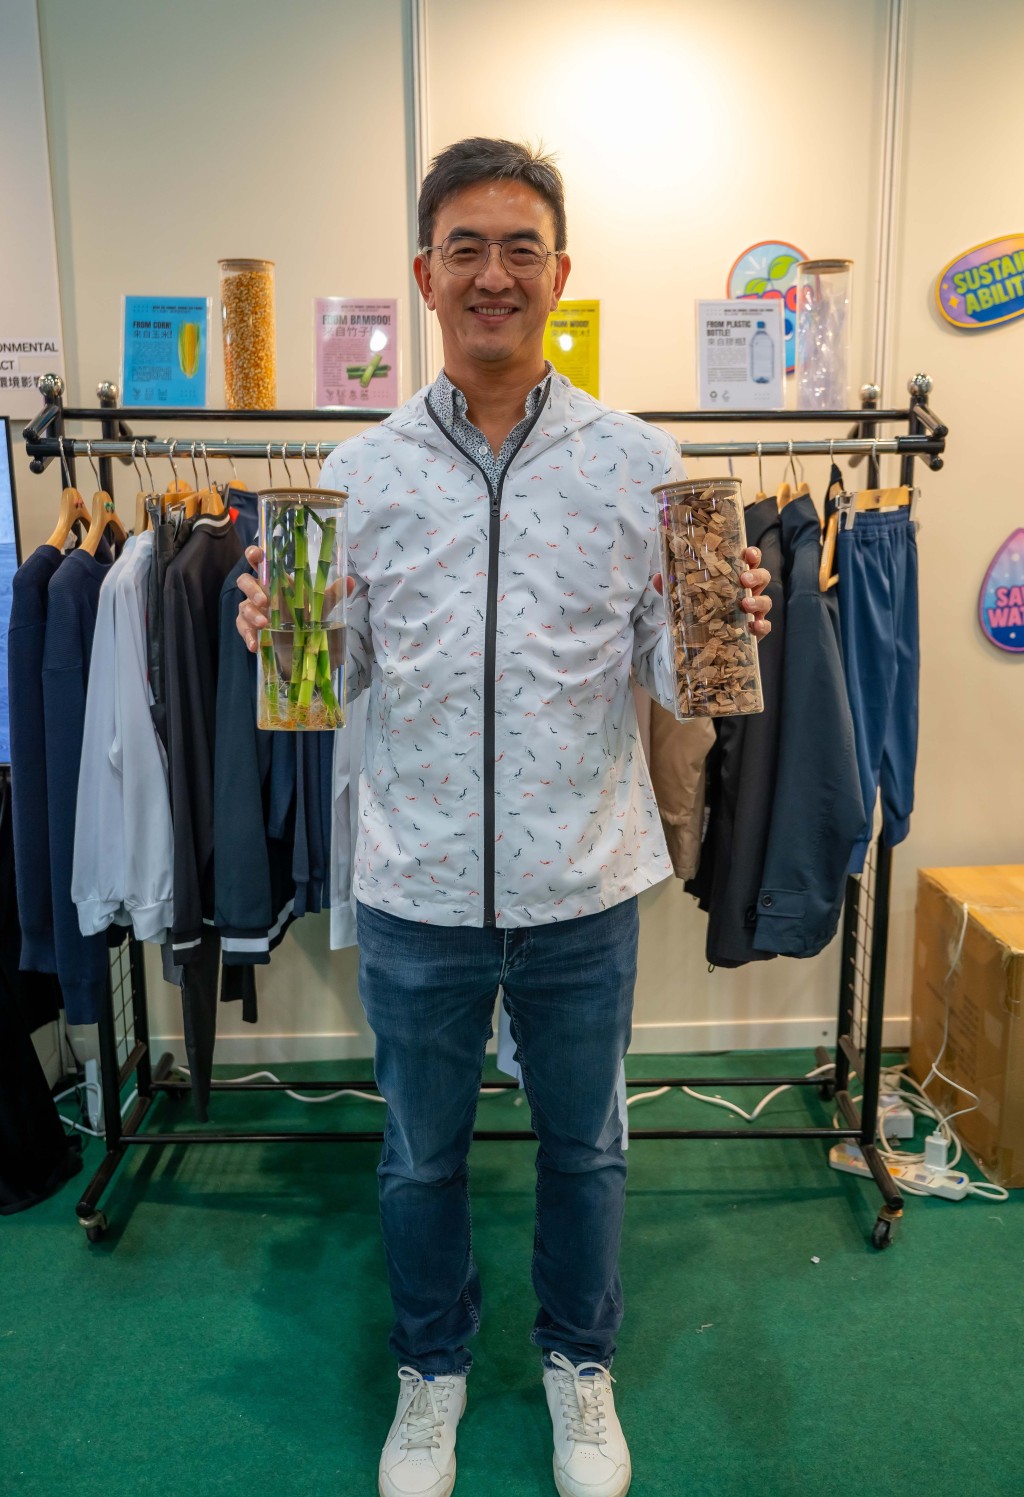 Paul经营家族企业庆年（Hanin），近年专注于可持续发展，他希望大众对可持续时尚、升级再造衣物、环保材料有更深入认识。